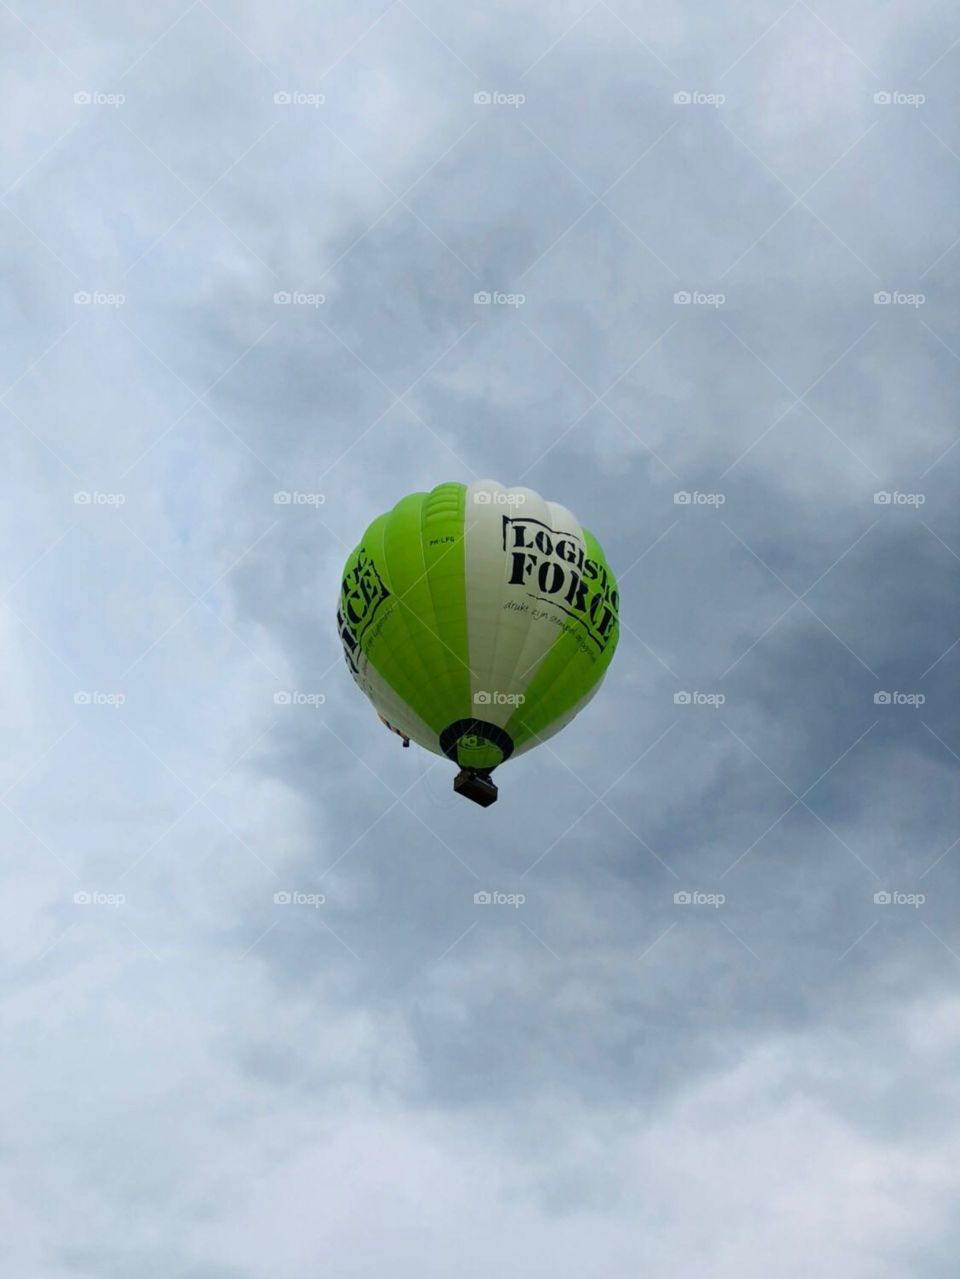 Balon in the sky